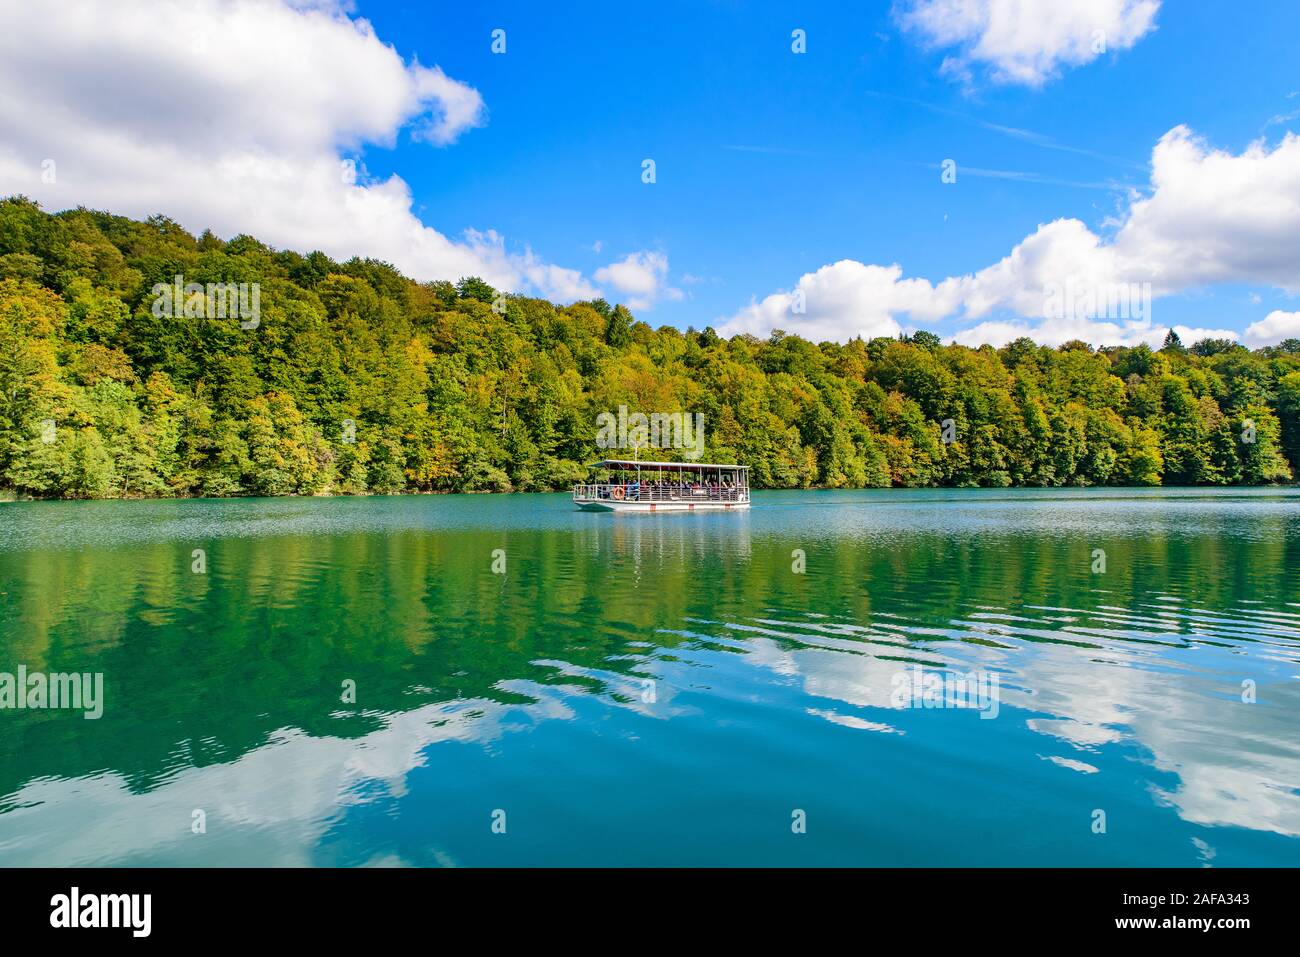 Boat ride on turquoise lake at Plitvice Lakes National Park (Plitvicka Jezera), Croatia Stock Photo